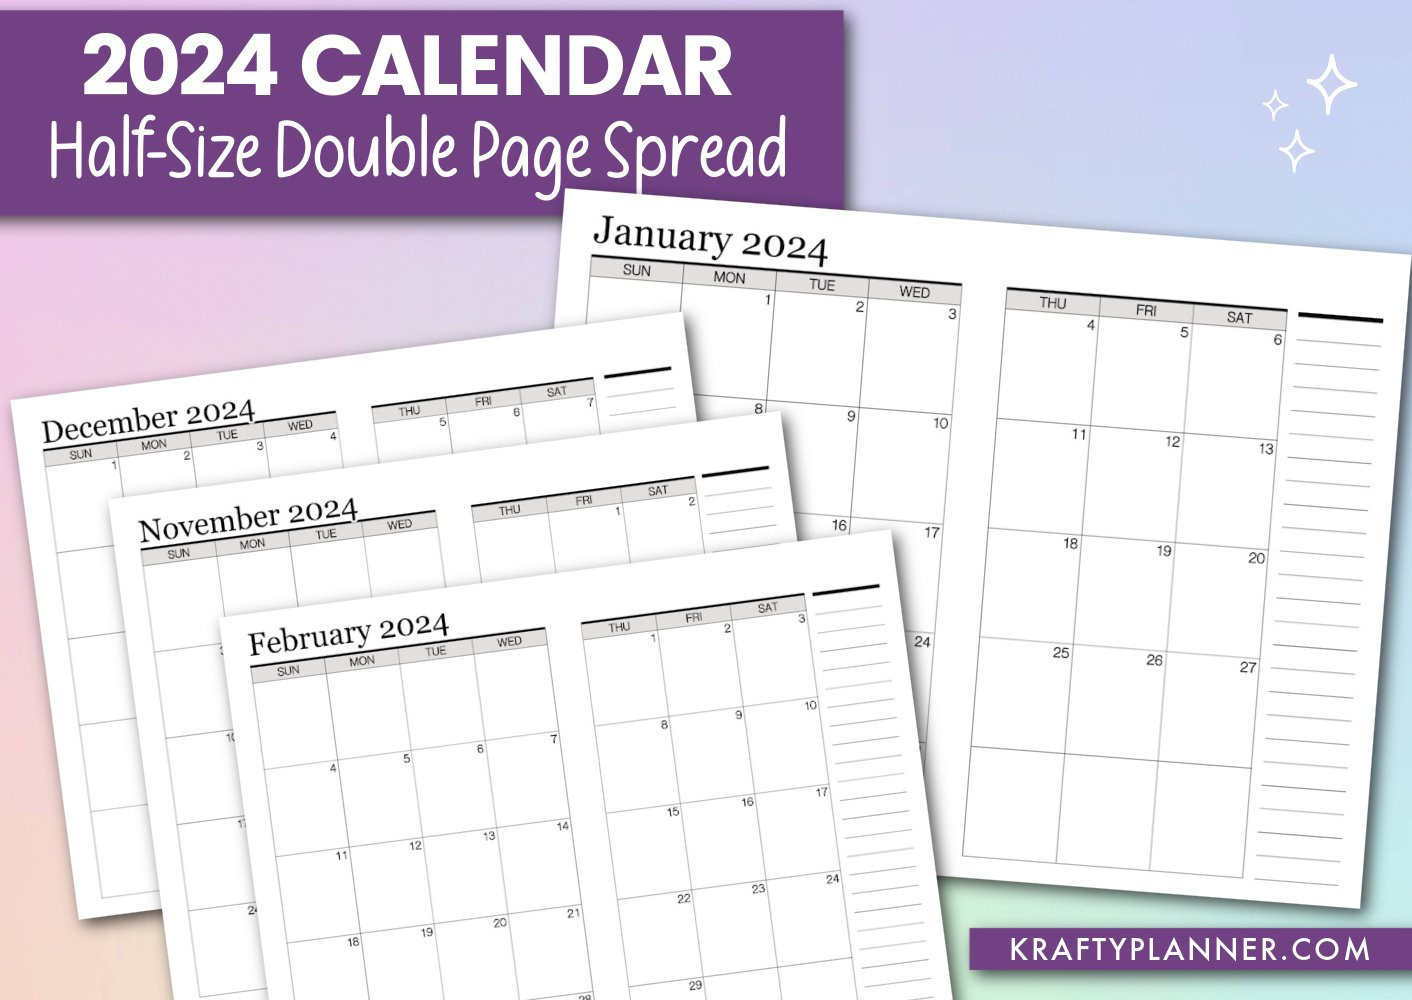 Free Printable 2024 Calendar: Half Size Double Page Spread intended for Free Printable Calendar 2024 Half Size